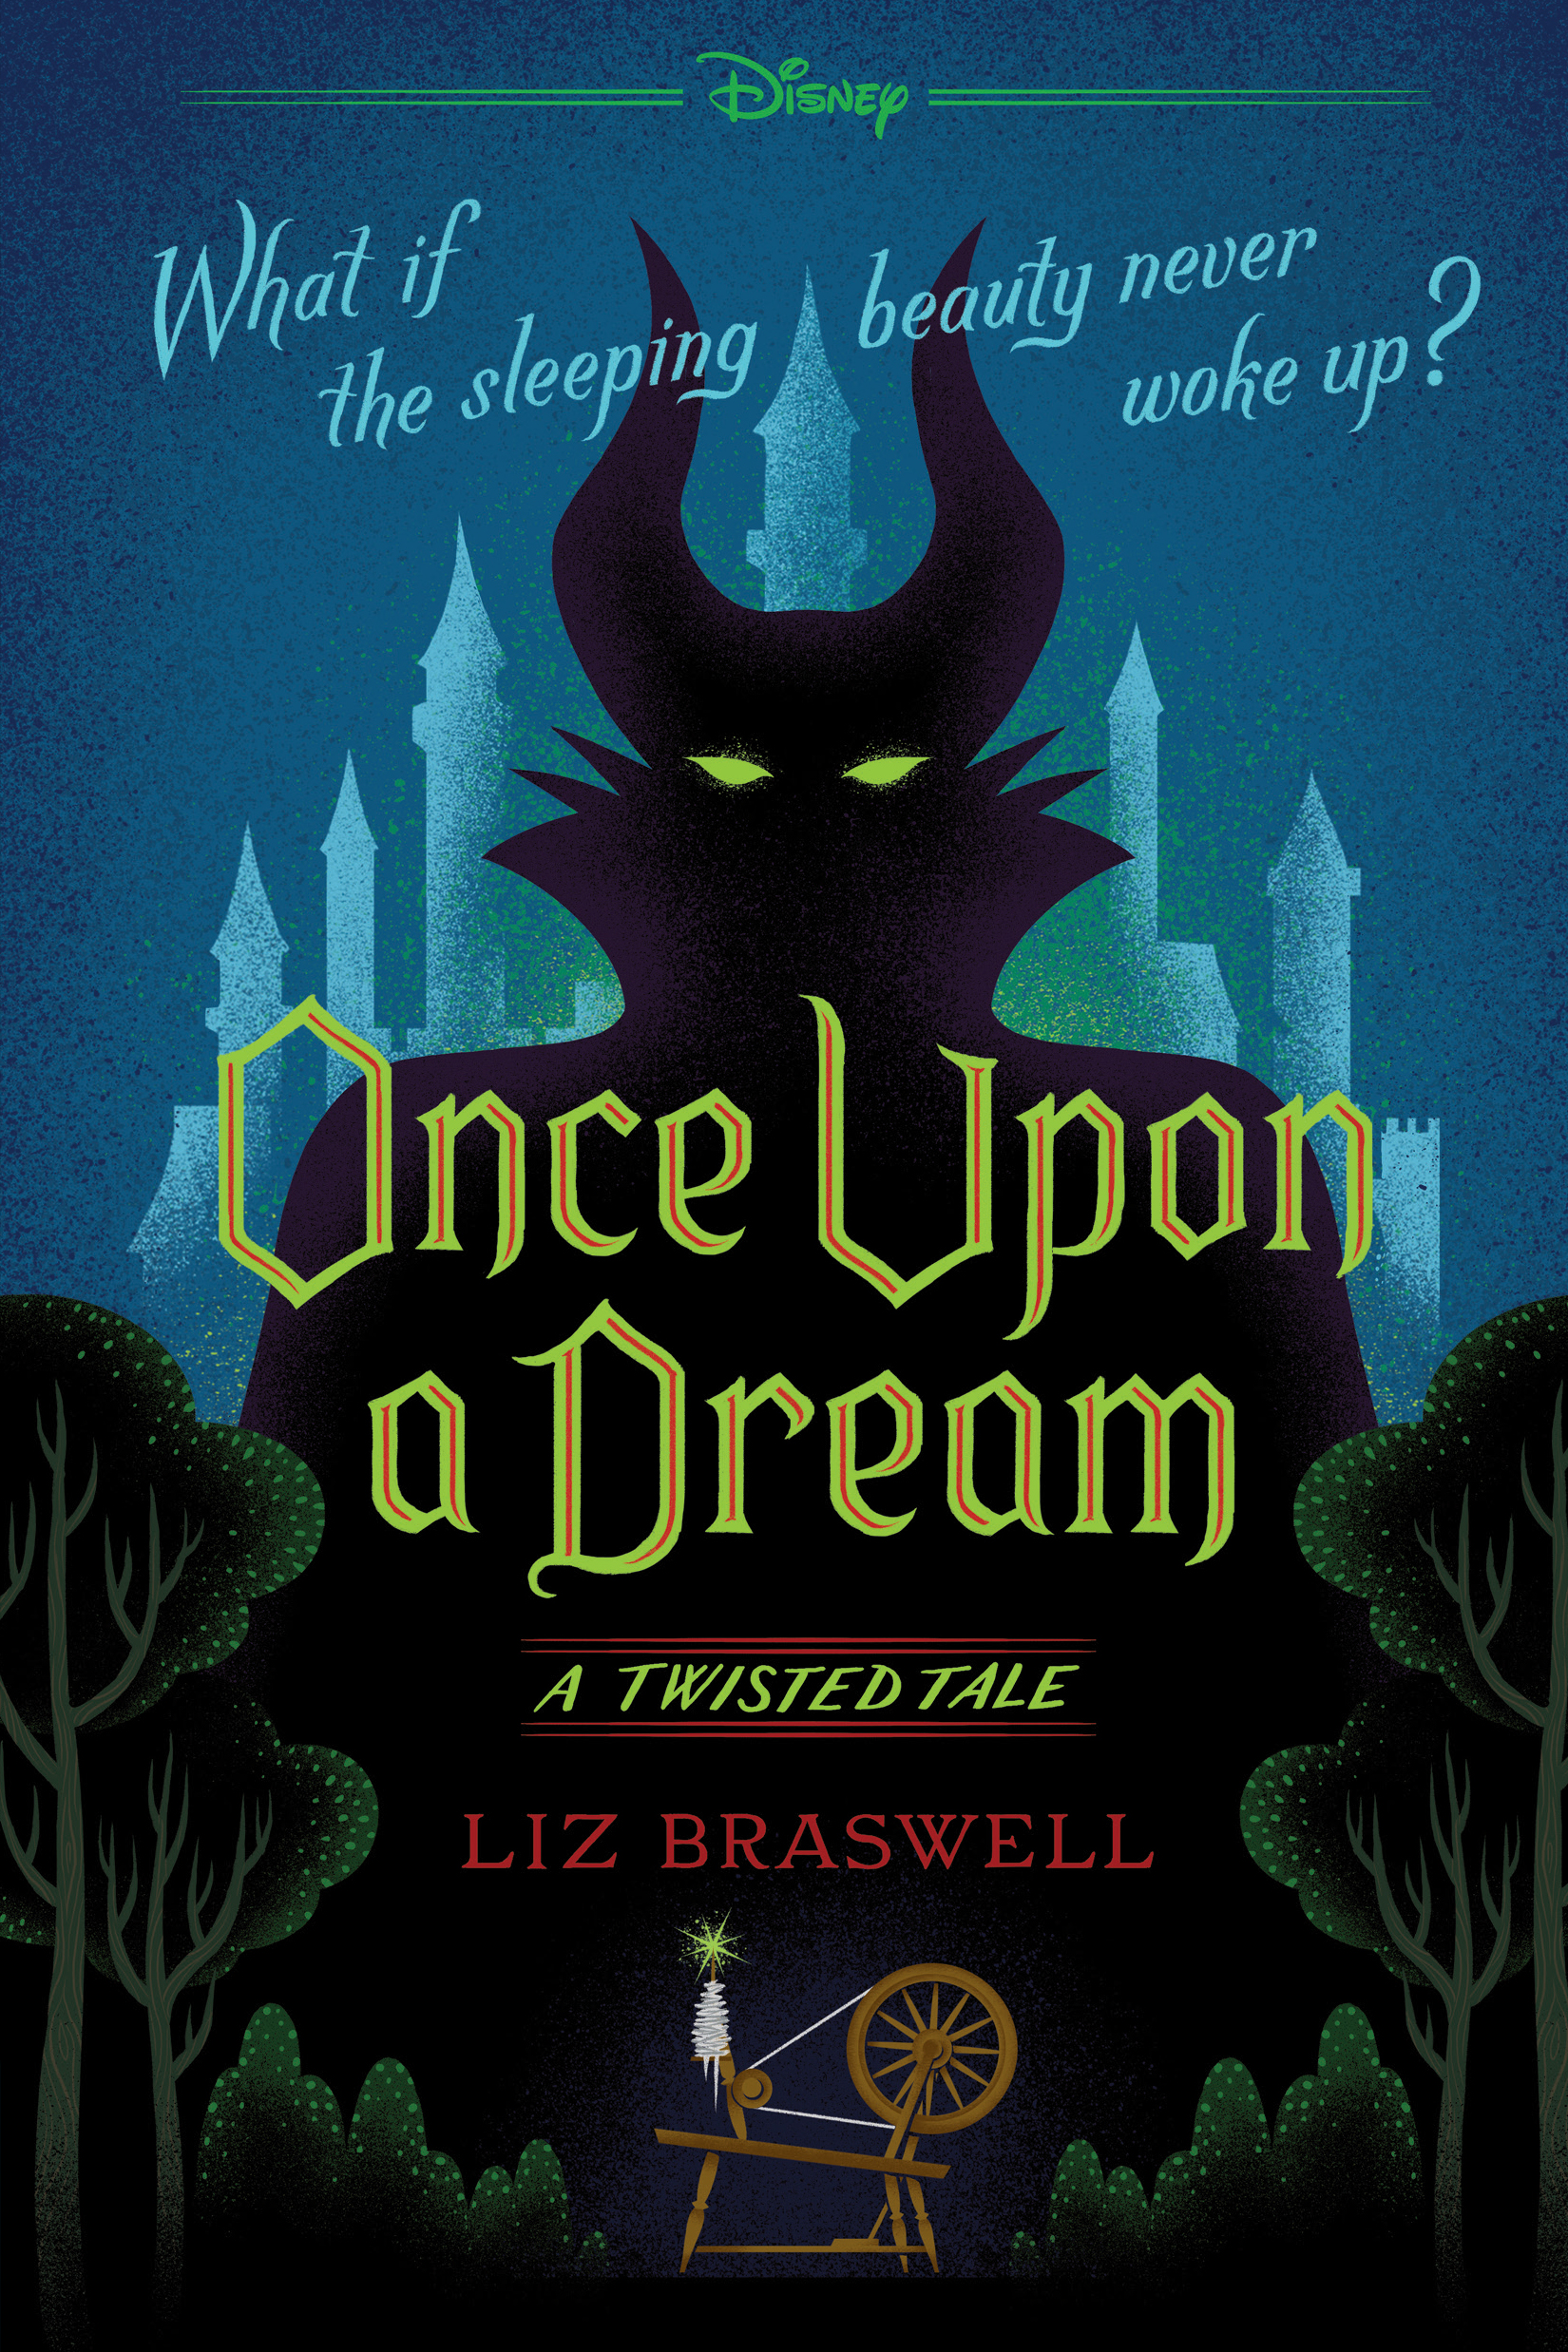 Disney Princess: Twisted Tales 3 Books Set by Liz Braswell (Volume 2) NEW